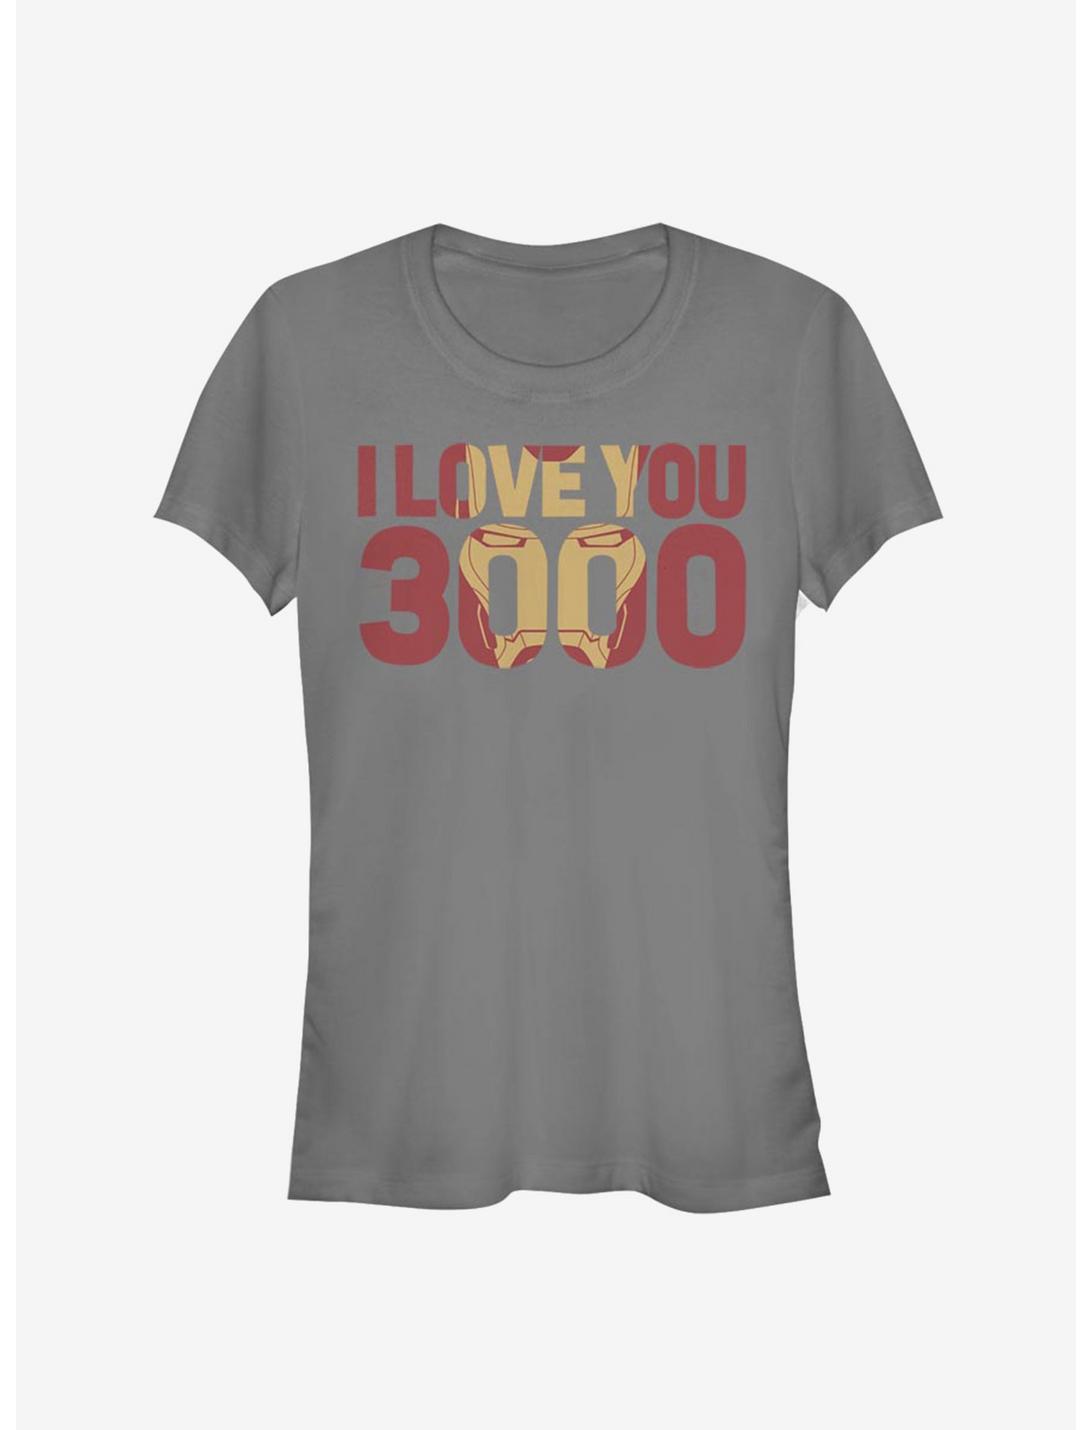 Marvel Avengers: Endgame Iron Man I Love You 3000 Girls T-Shirt, , hi-res